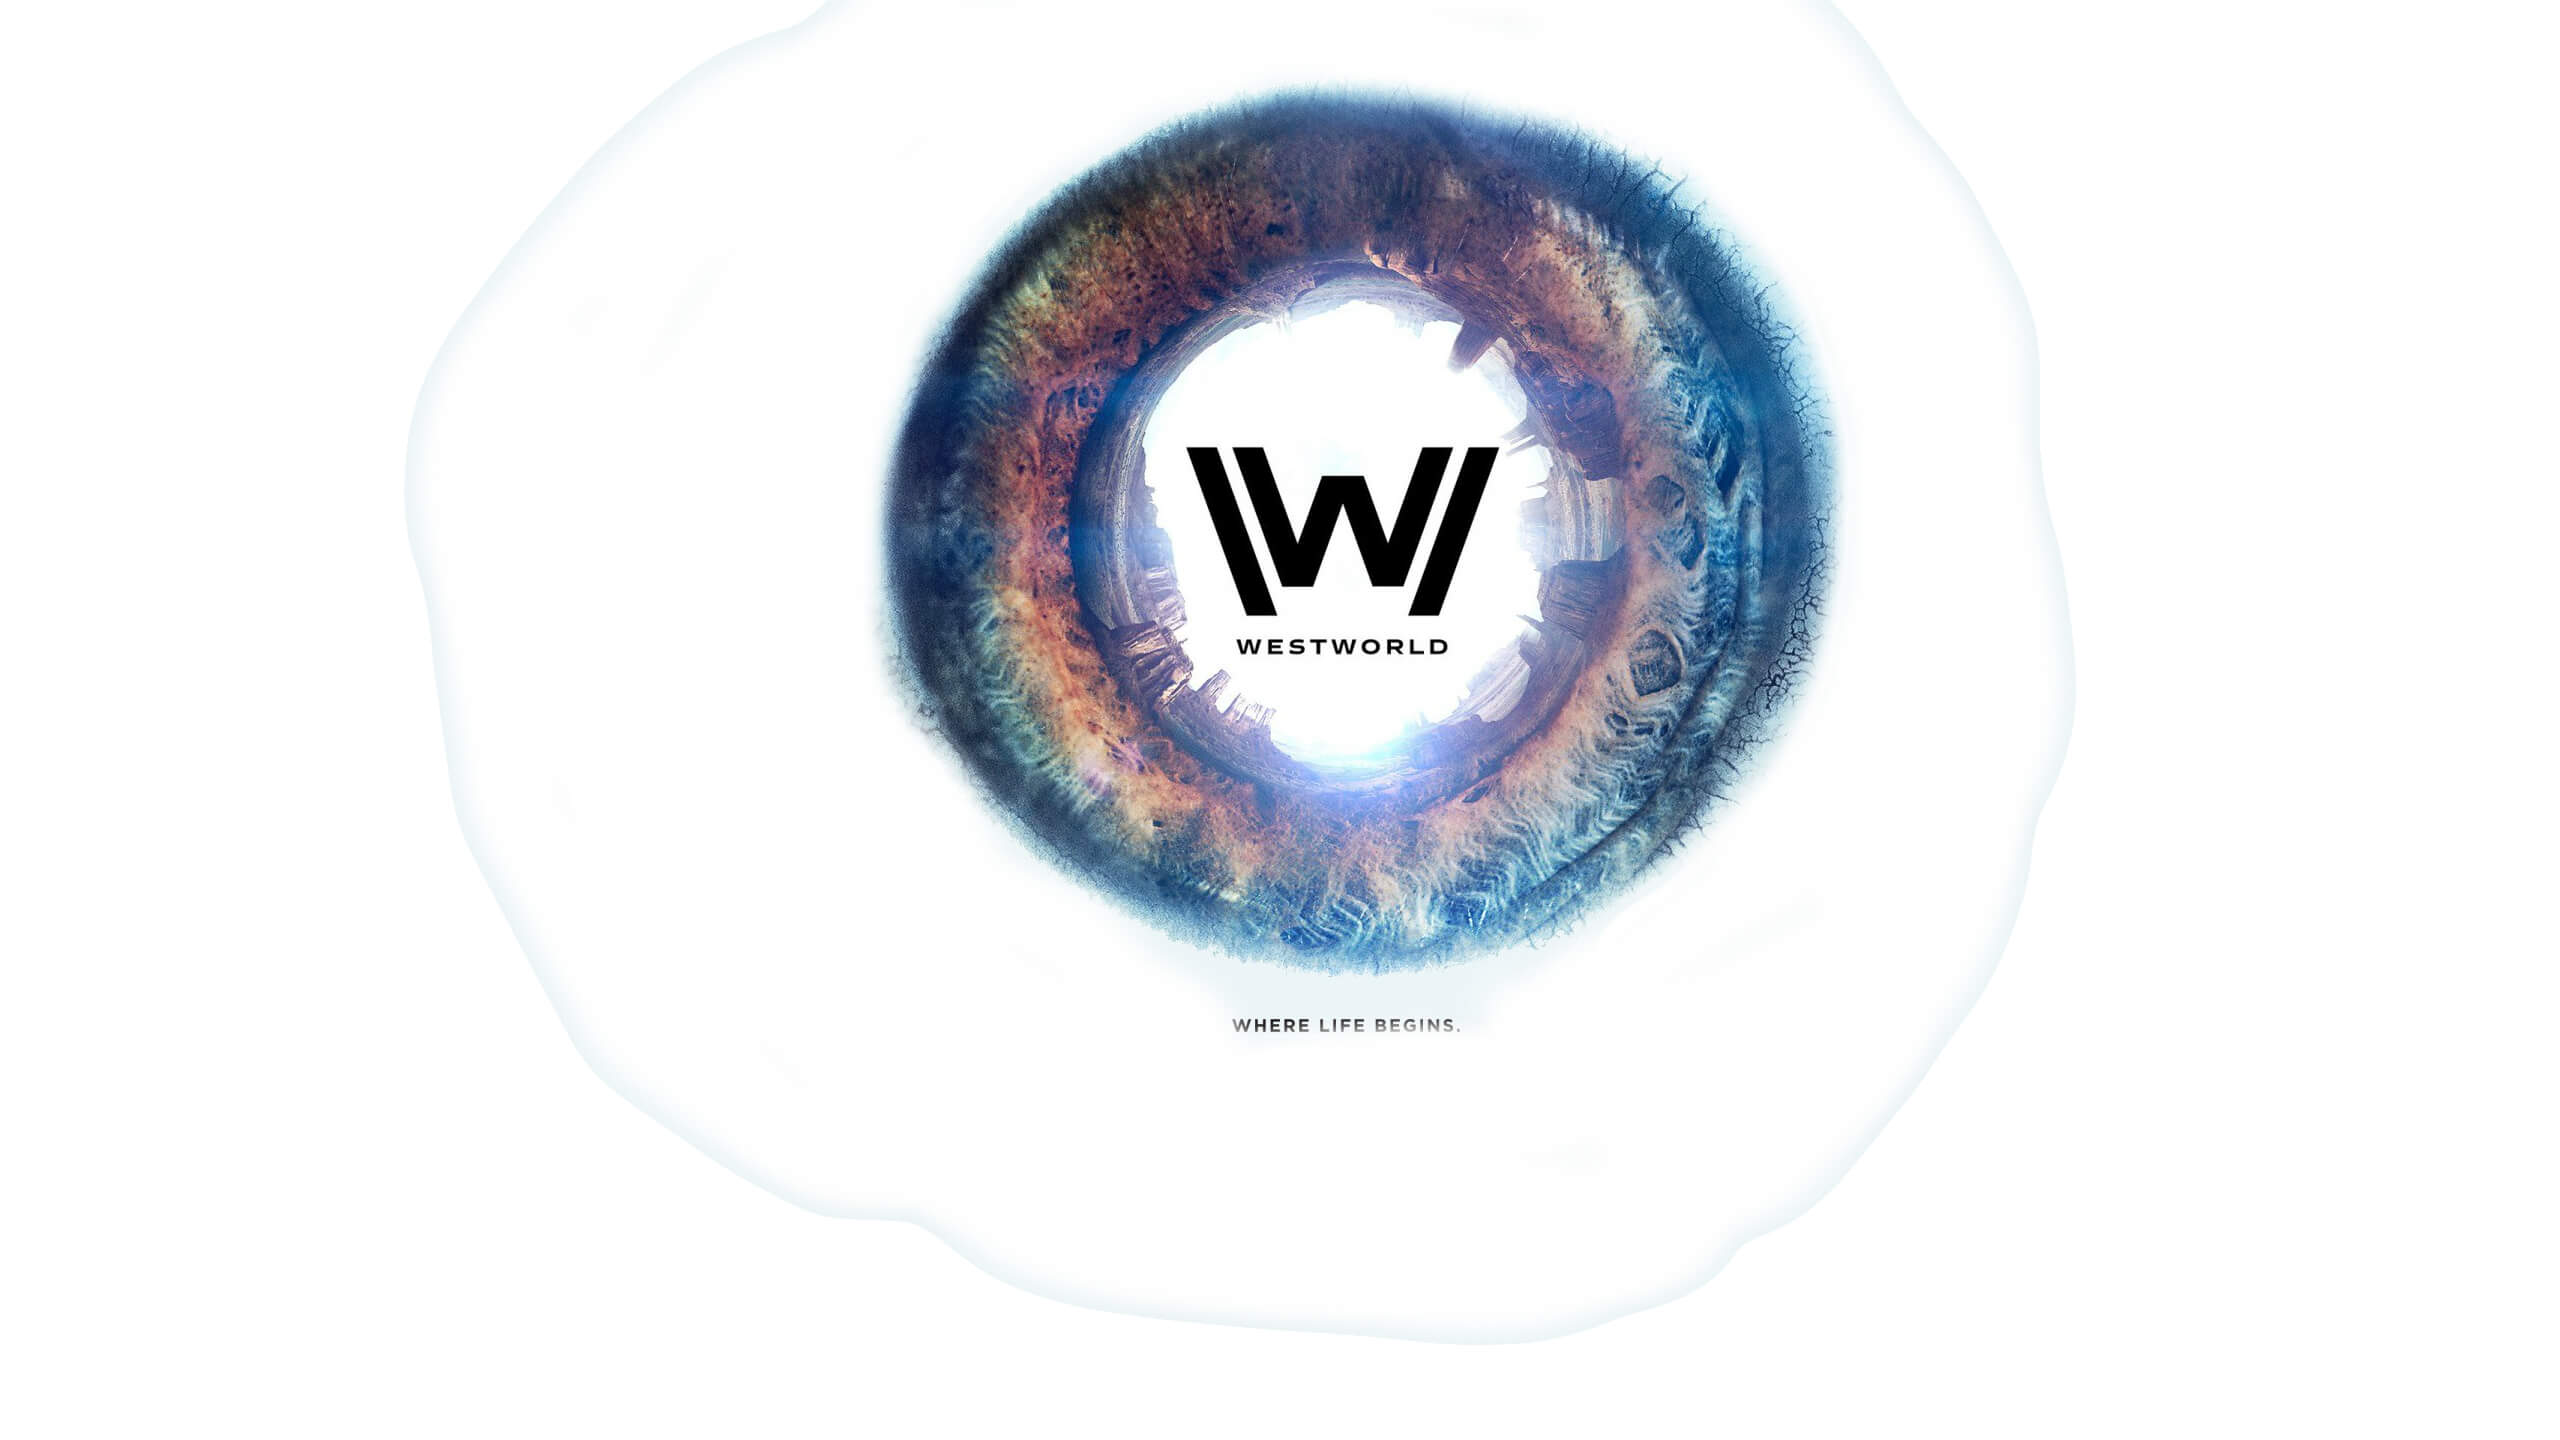 Westworld Season 3 Wallpapers